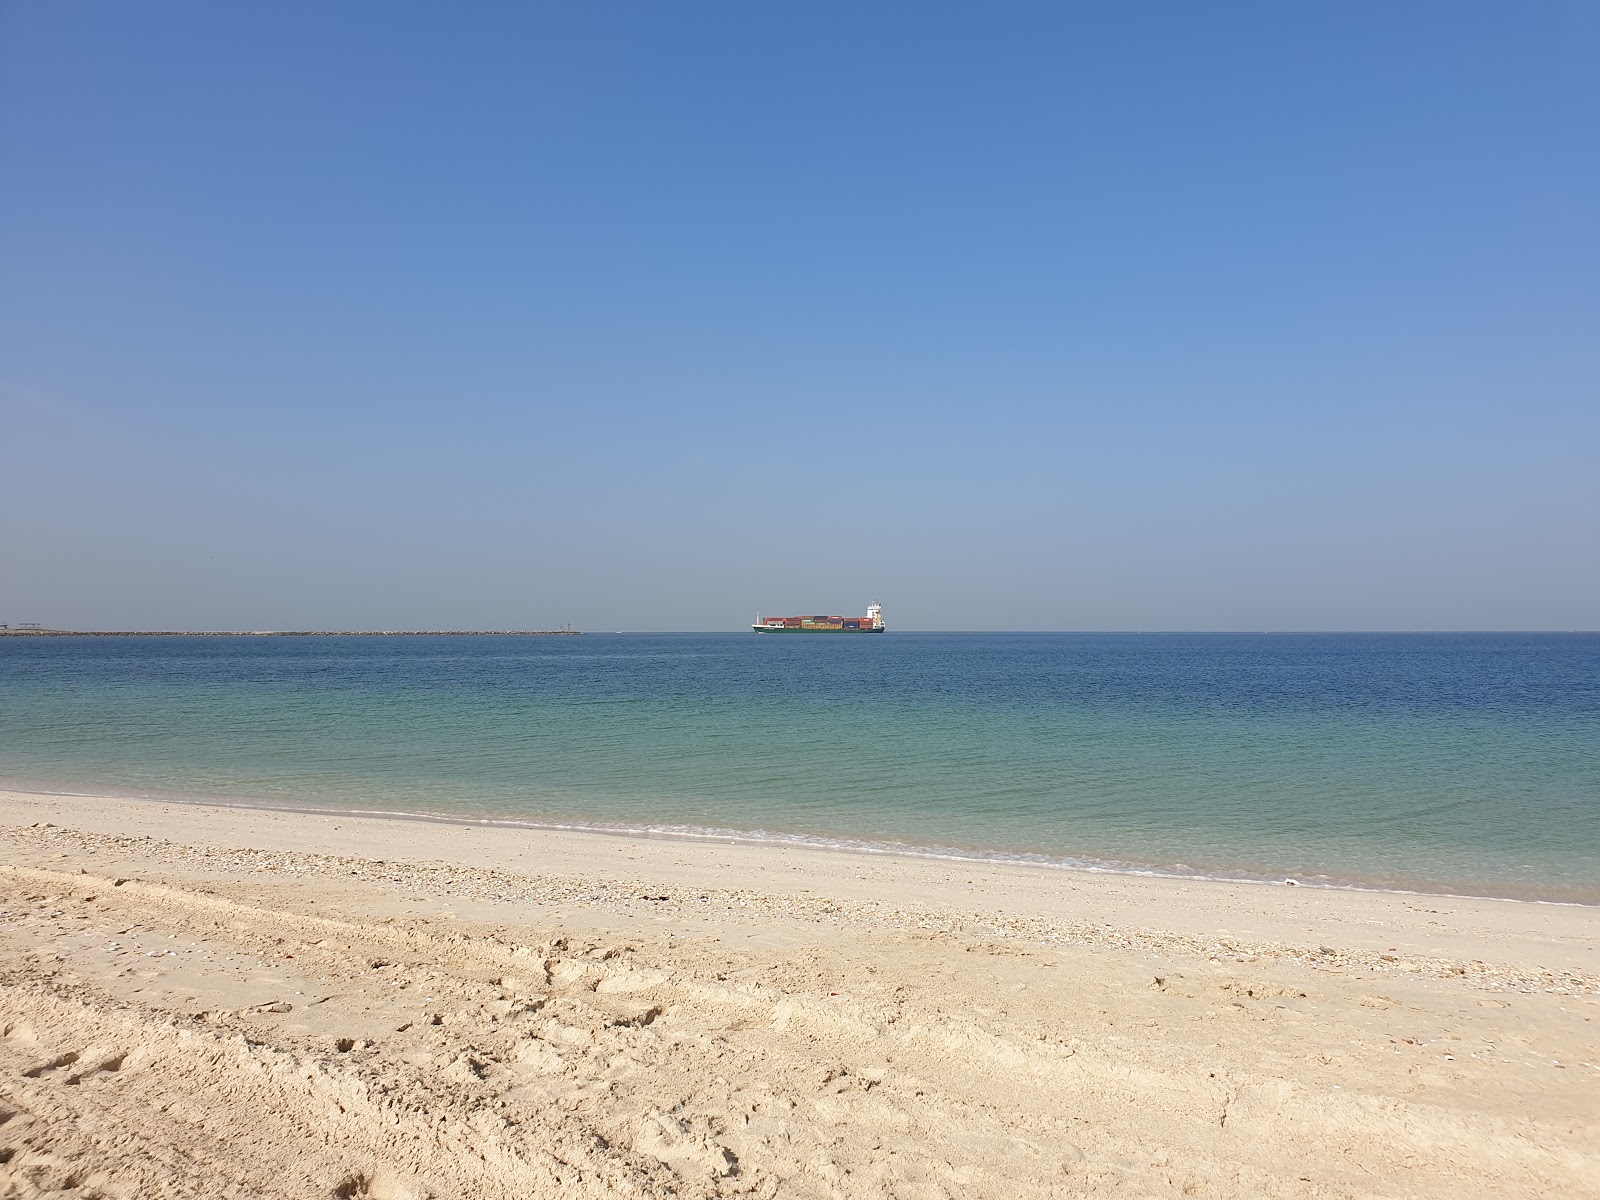 Fotografie cu Al Zorah beach cu nivelul de curățenie in medie